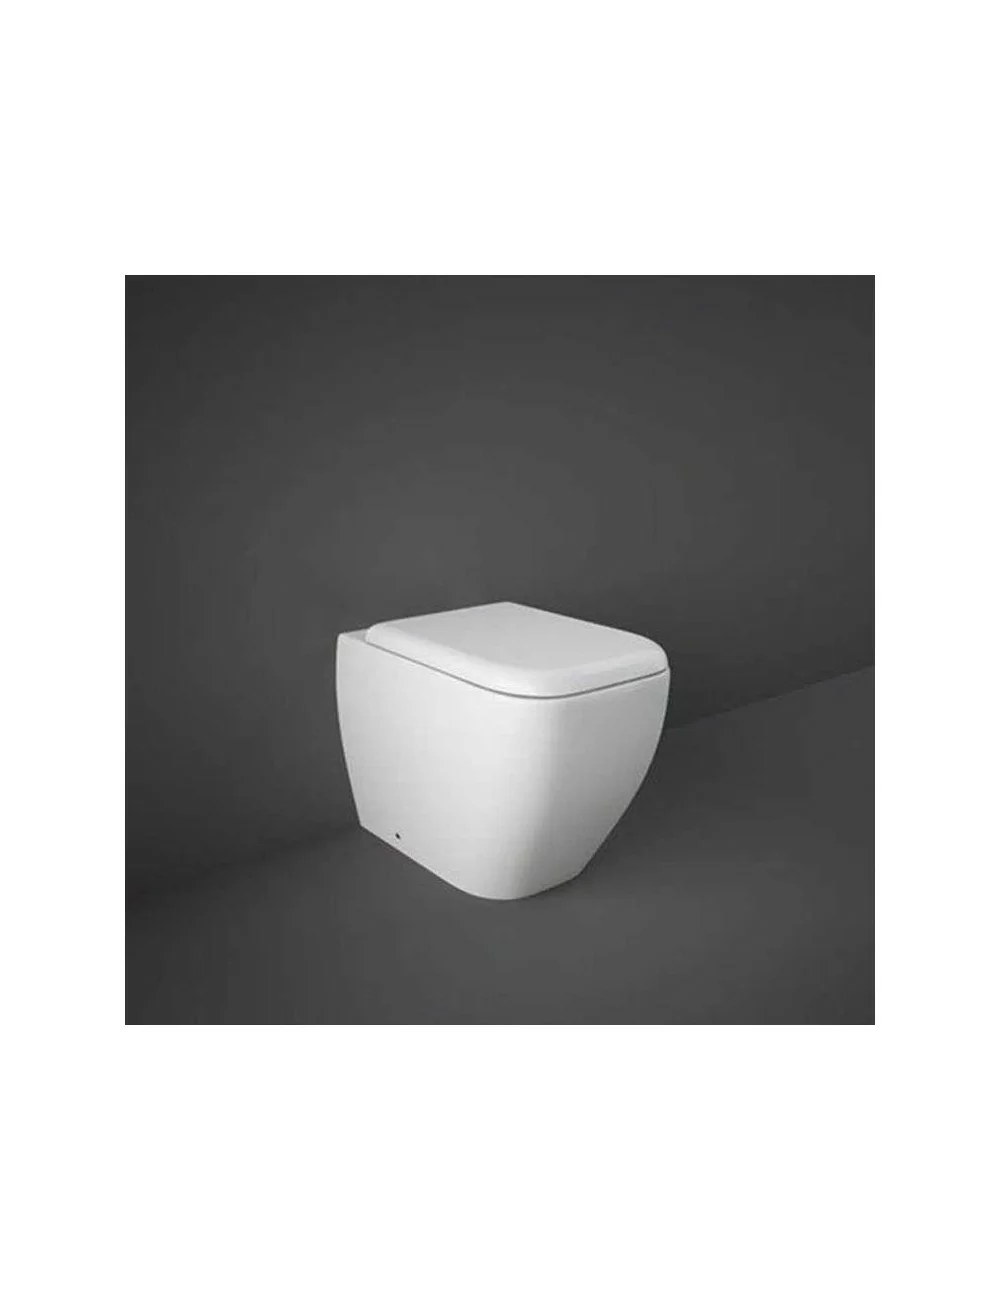 WC a terra filo muro con sistema rimless linea Metropolitan Rak Ceramics